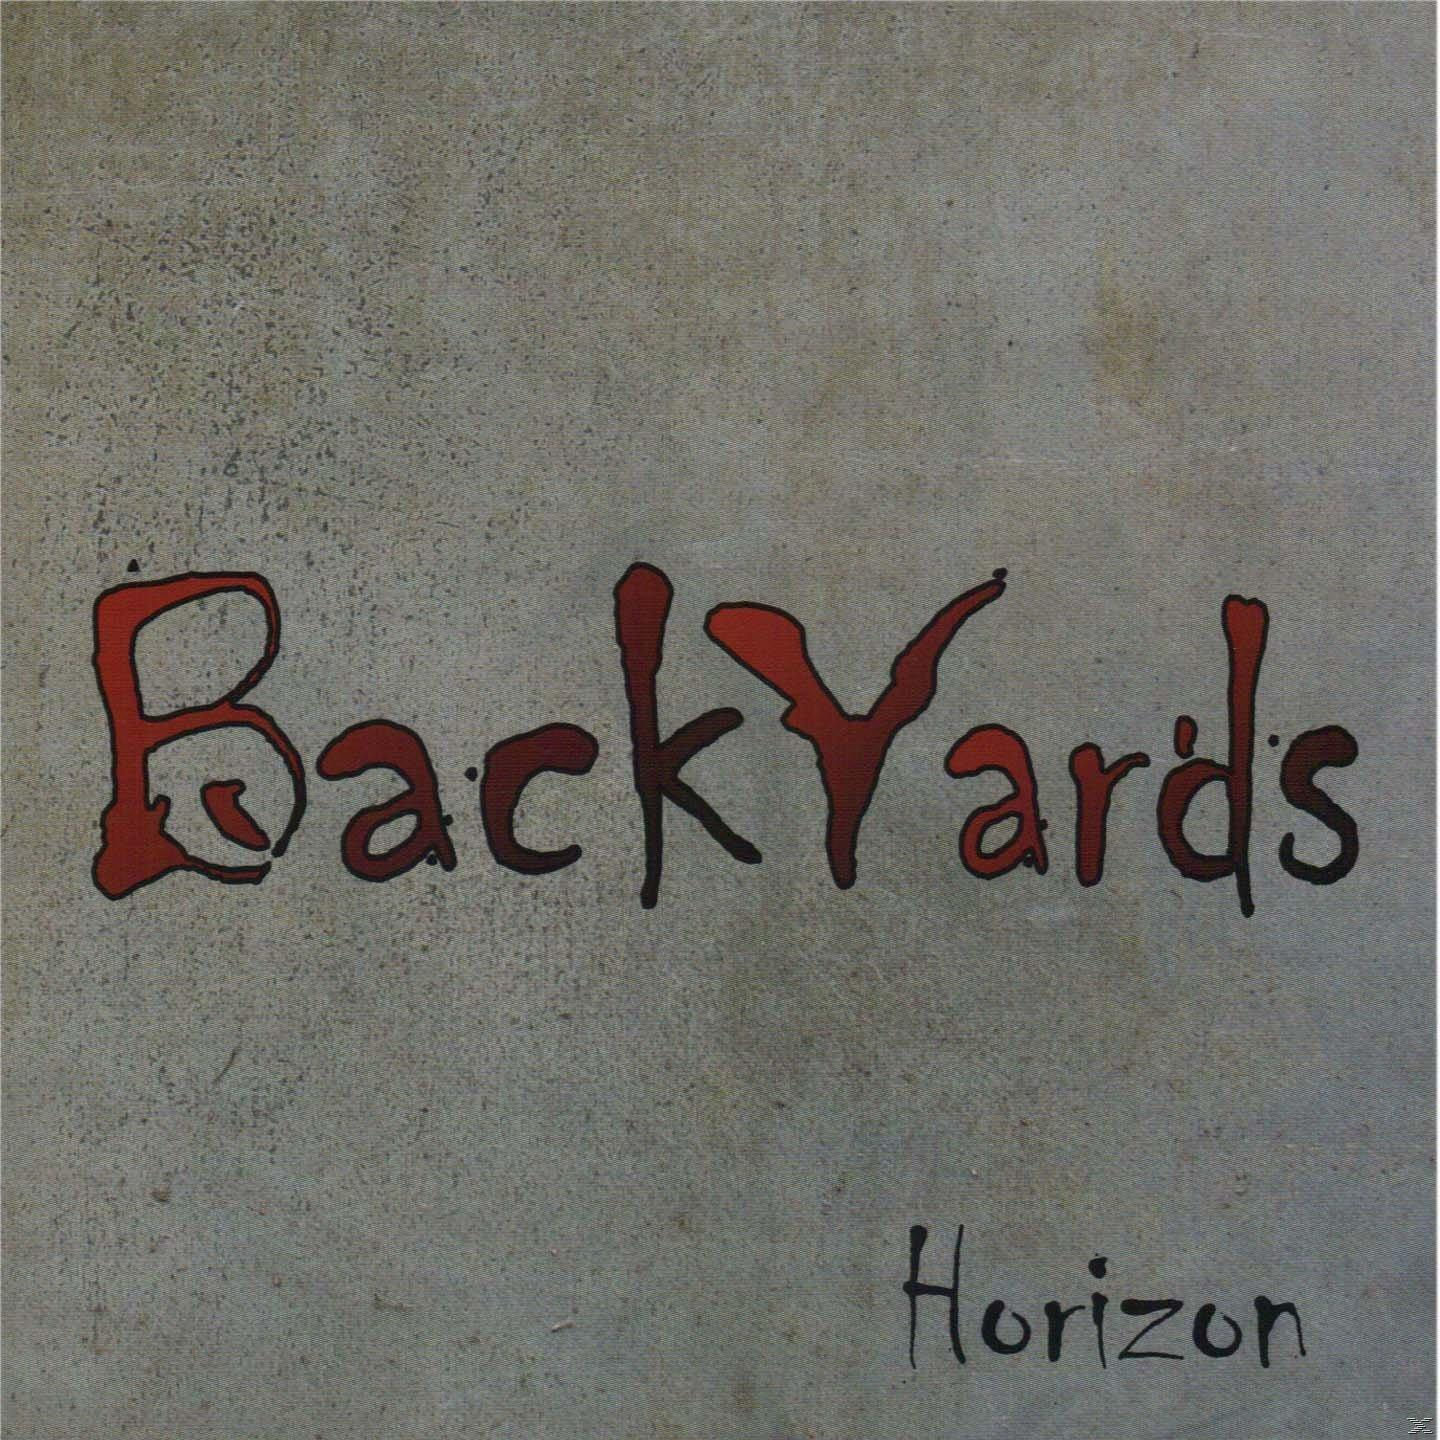 Horizon - - Backyards (CD)